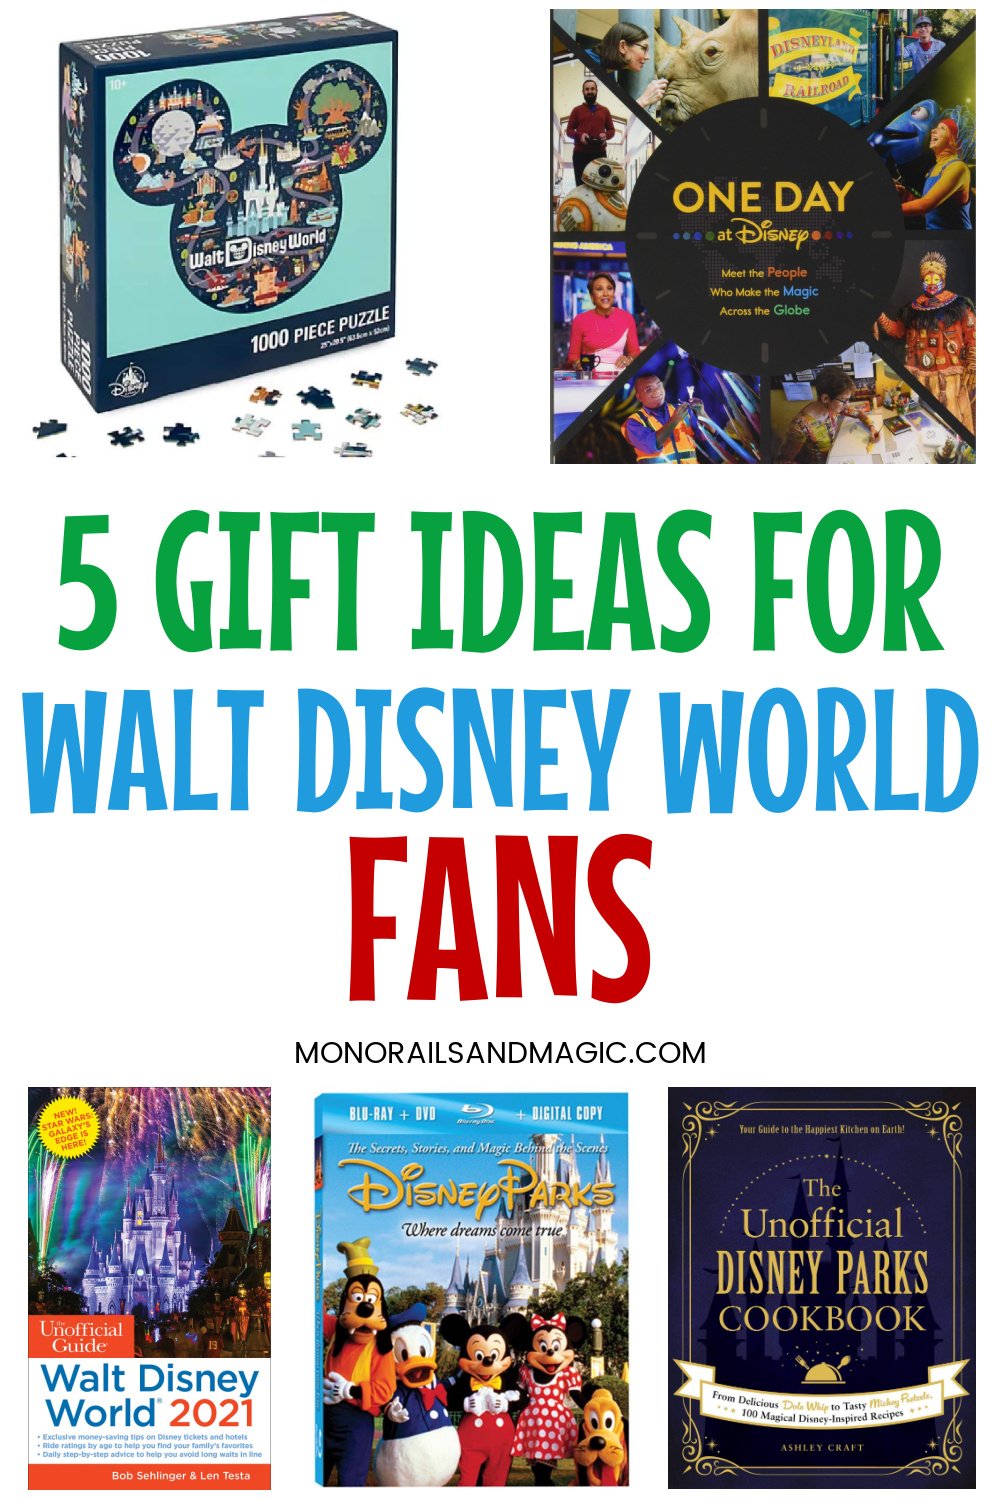 List of 5 gift ideas for Walt Disney World fans